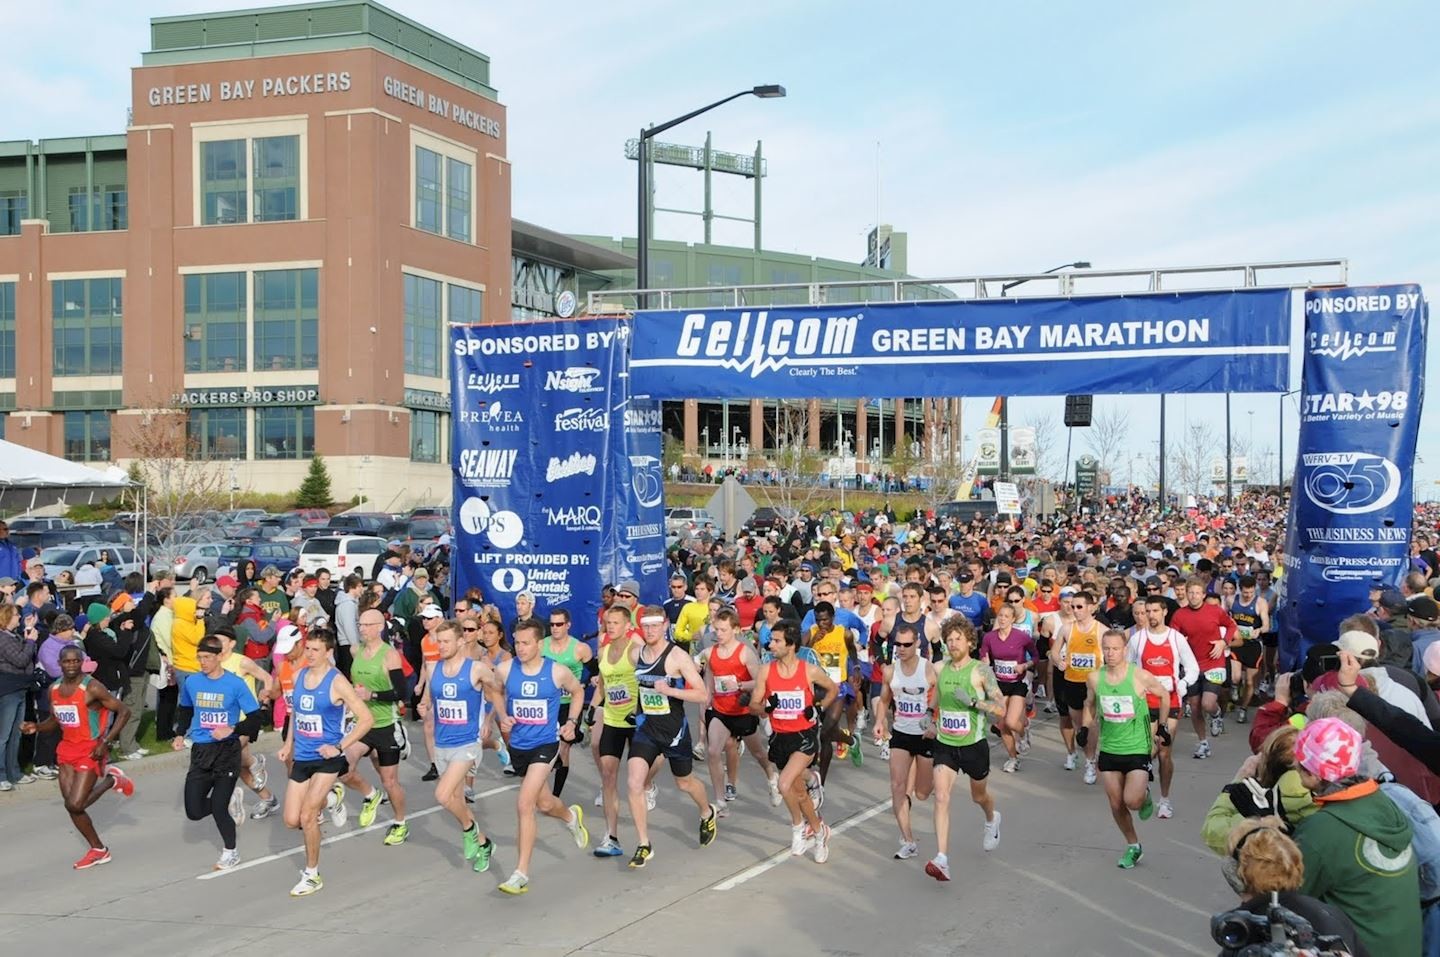 2021 Green Bay Marathon will be held virtually due to COVID19